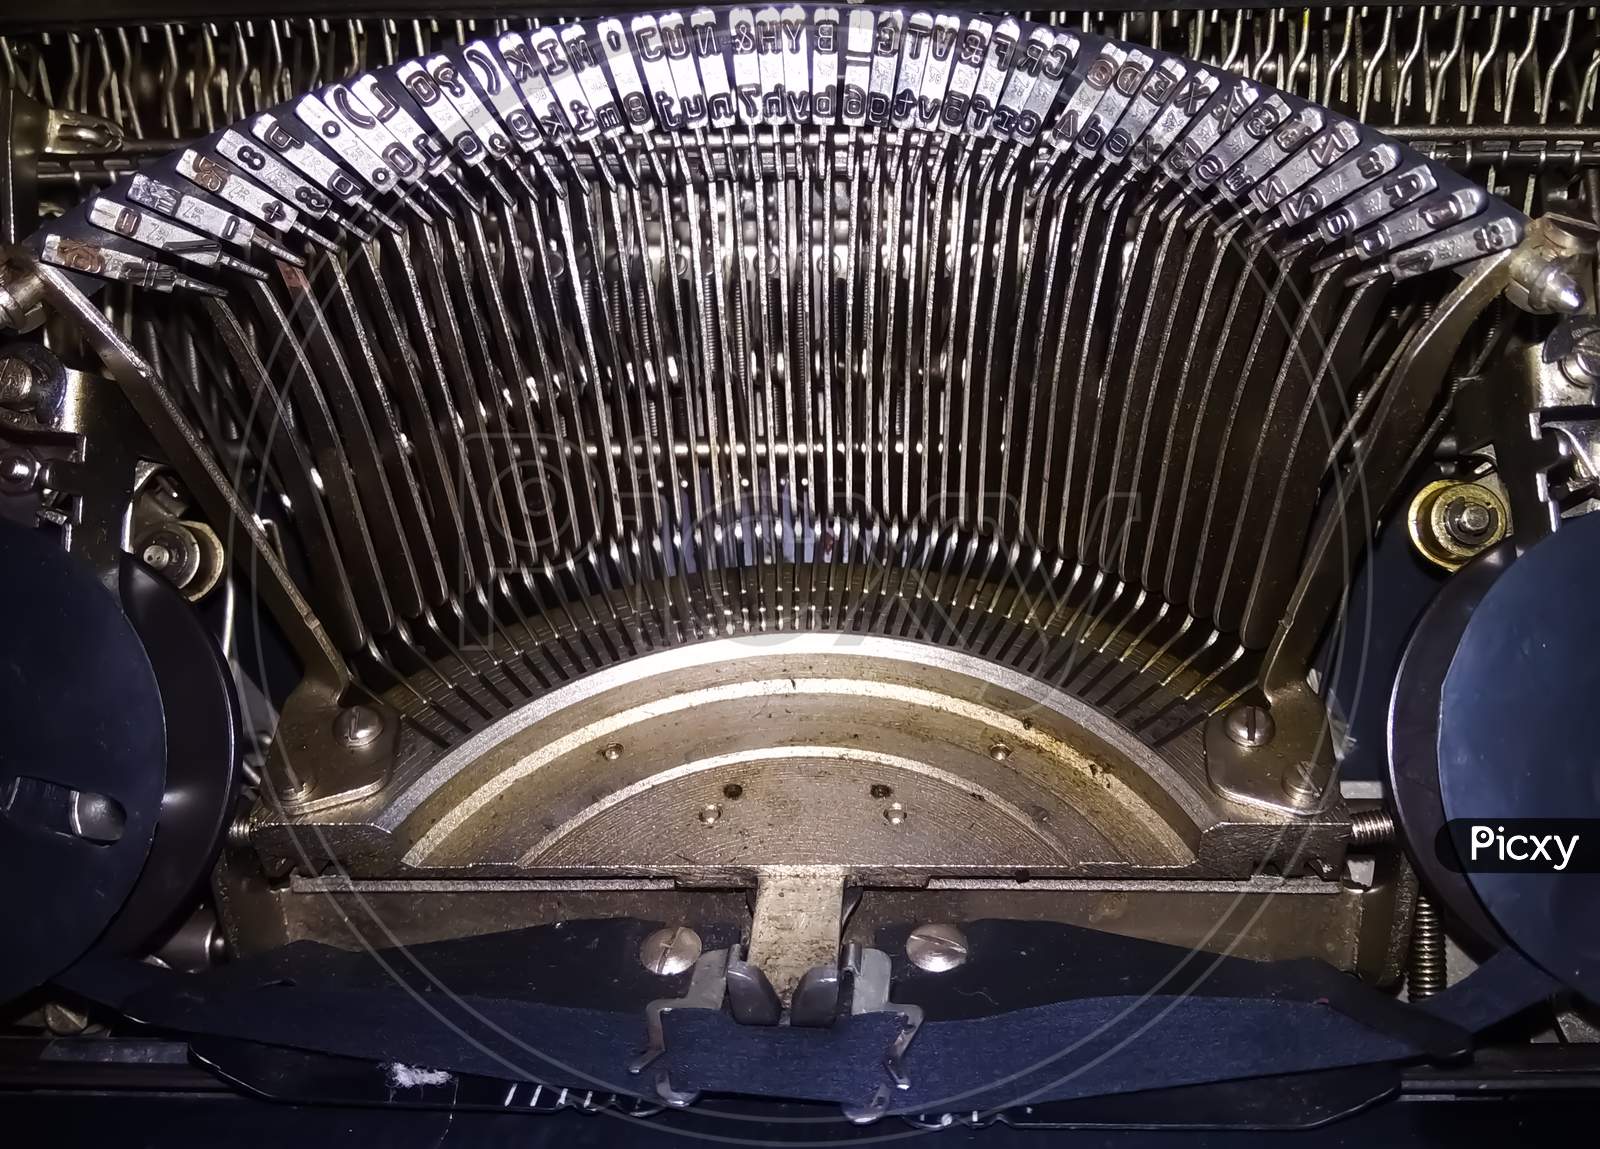 Strokes of typewriter machine